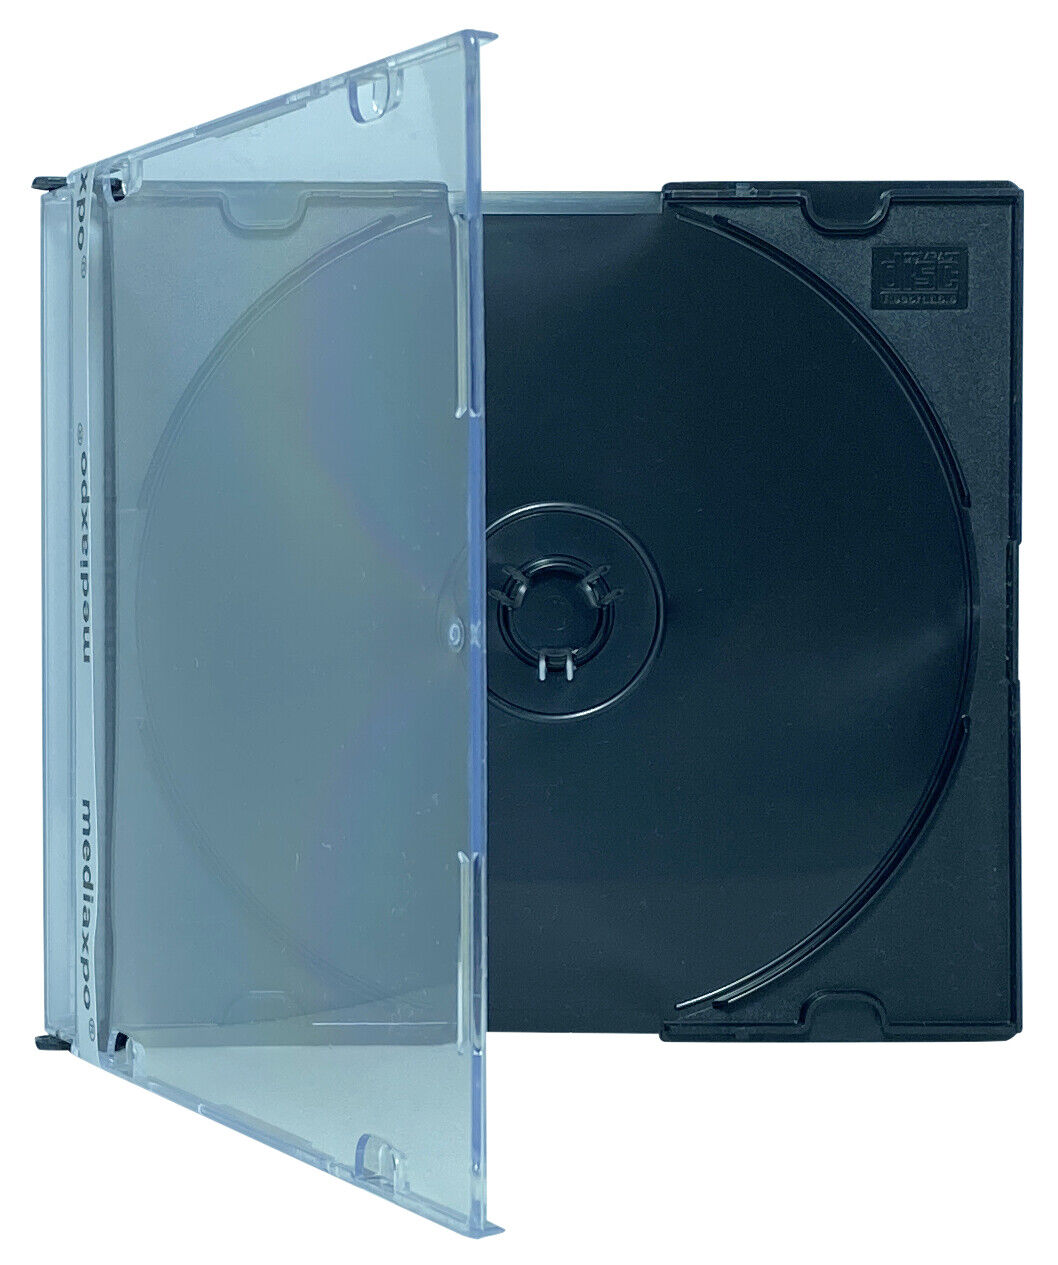 SLIM Black CD Jewel Cases Lot